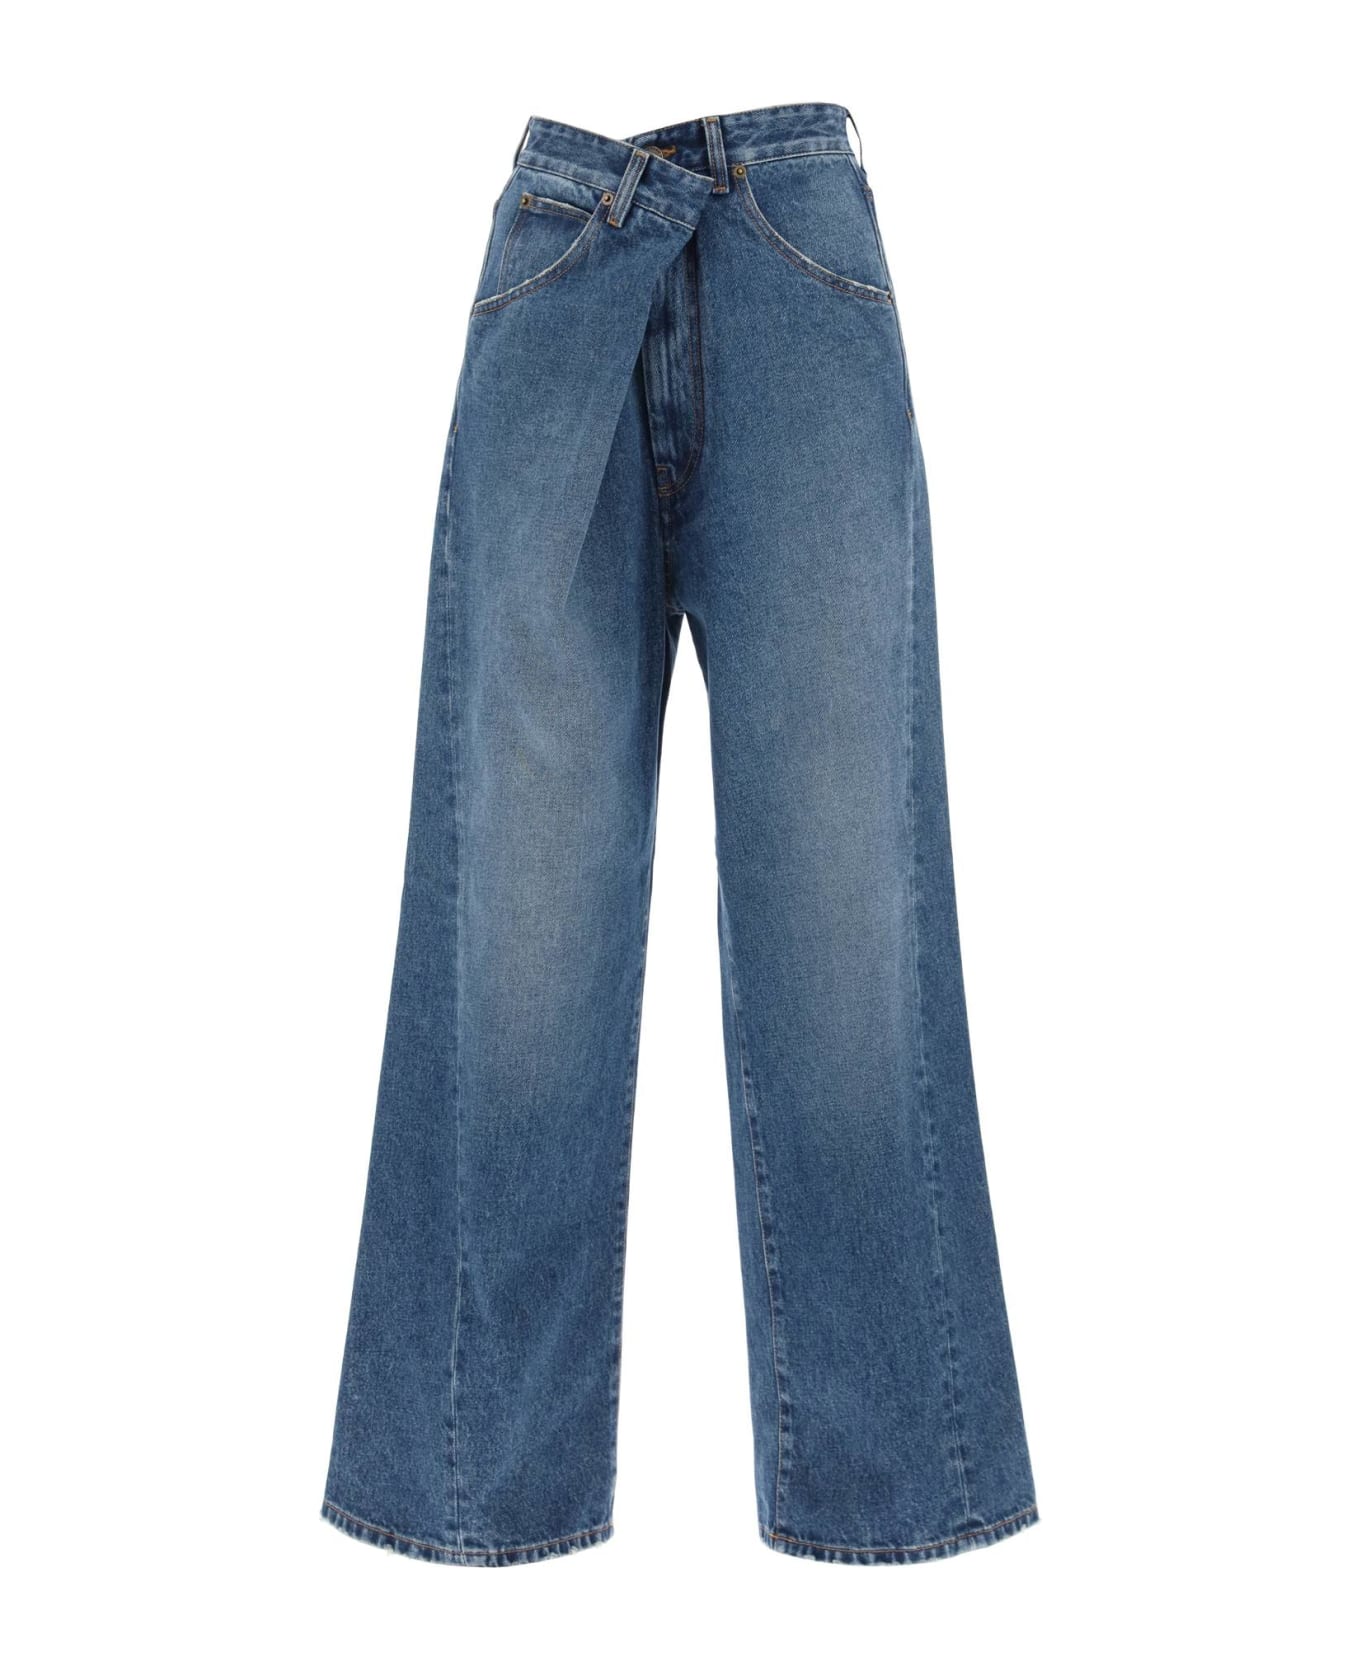 DARKPARK 'ines' Baggy Jeans With Folded Waistband - MEDIUM WASH (Light blue) デニム